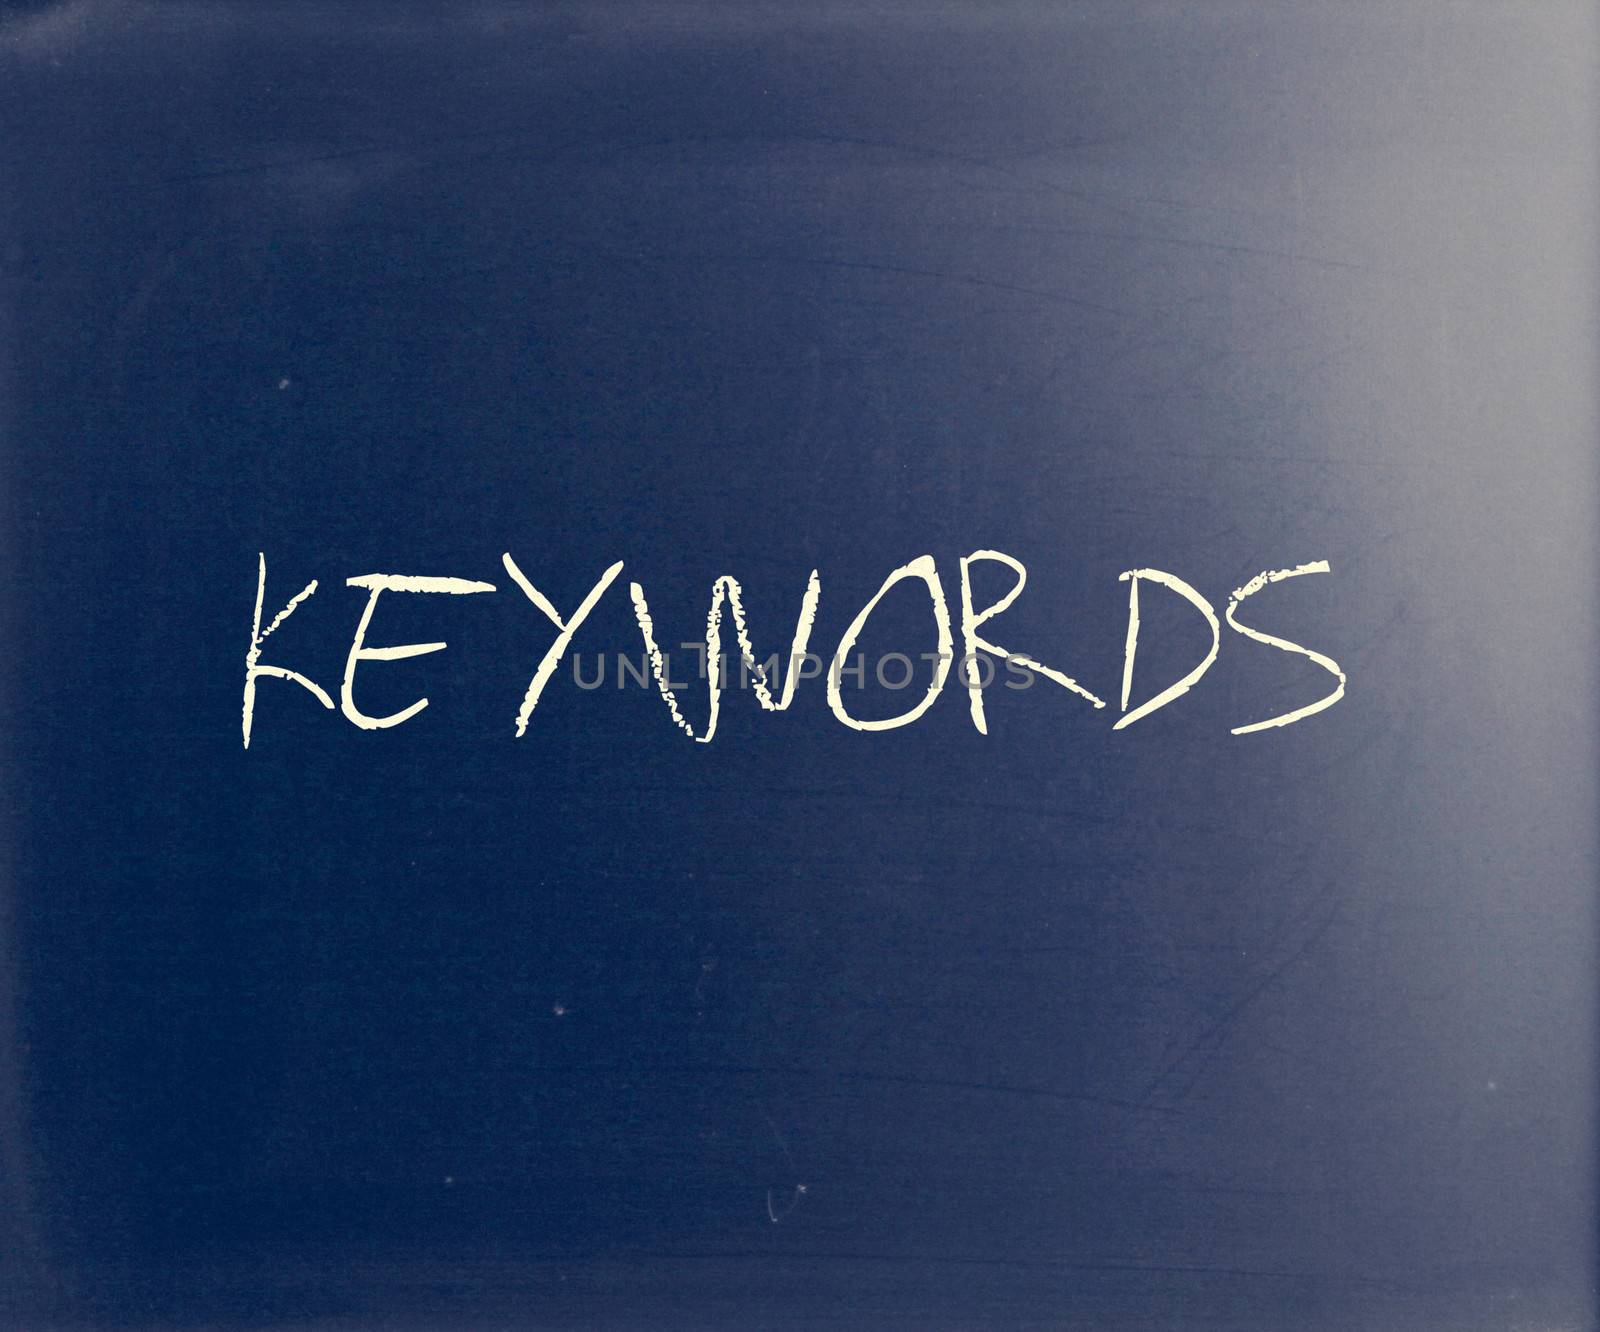 "Keywords" handwritten with white chalk on a blackboard.